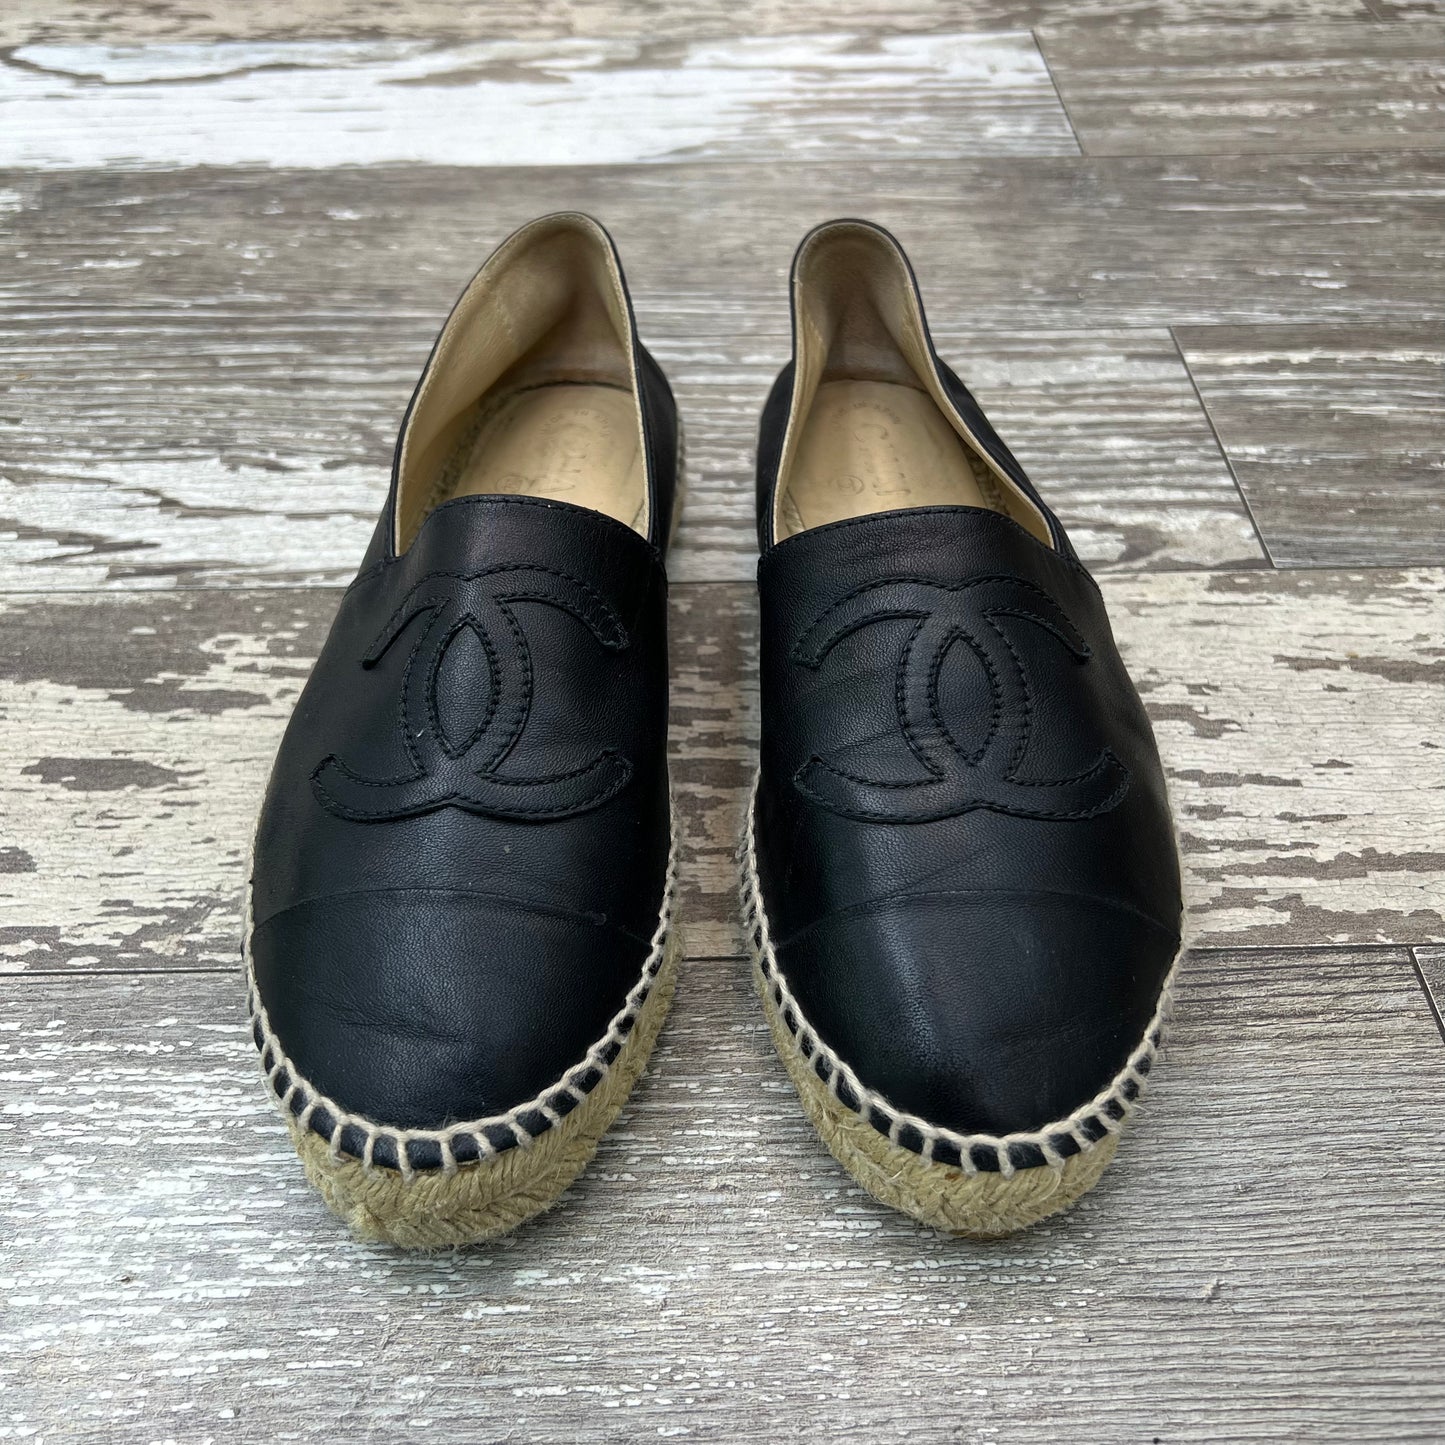 Chanel Black Leather Espadrilles, Size 38